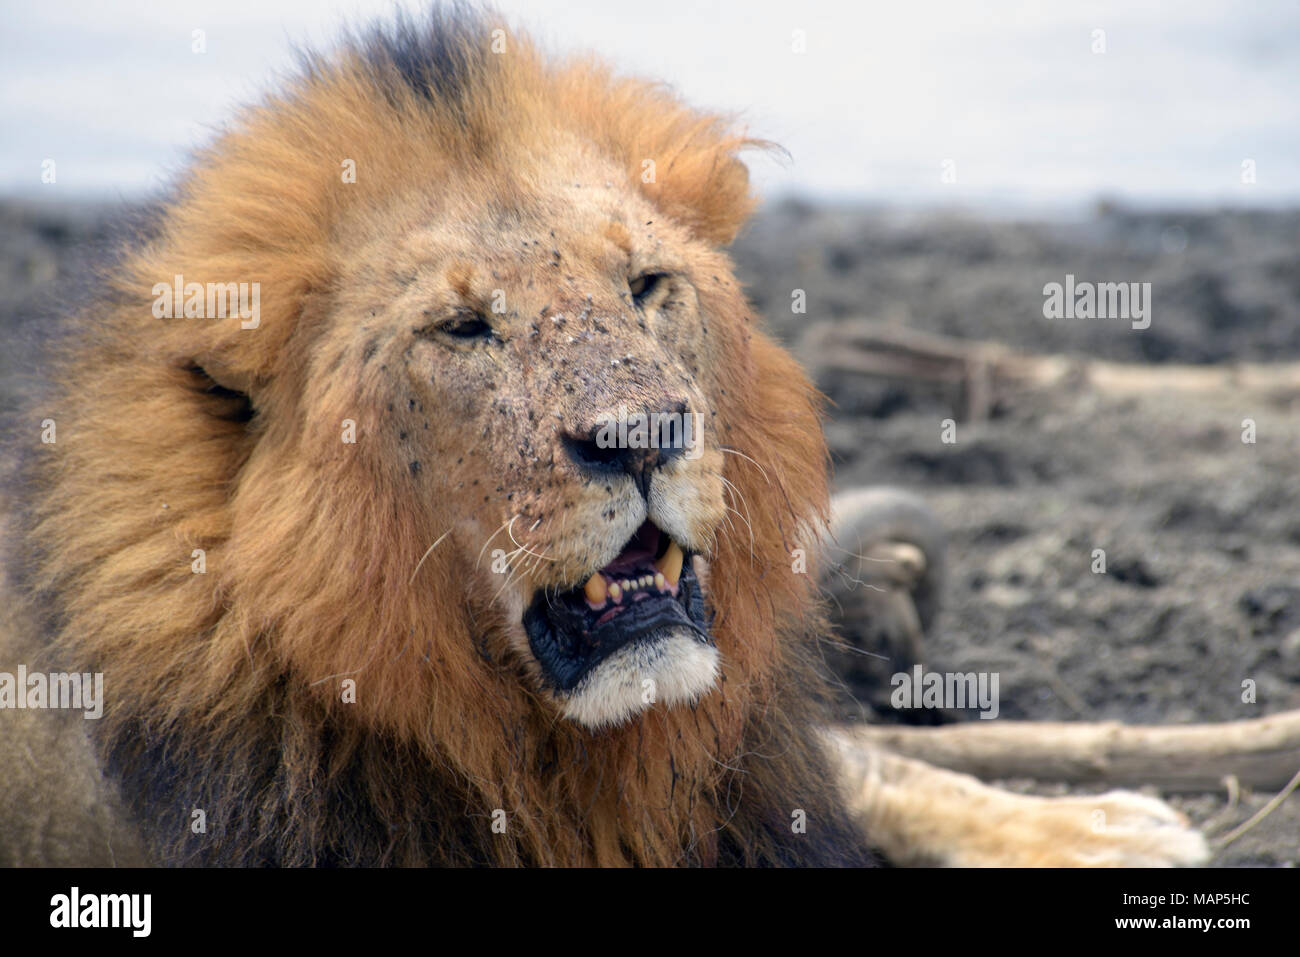 Male lion close up, by Lake Nakuru, Kenya. Stock Photo